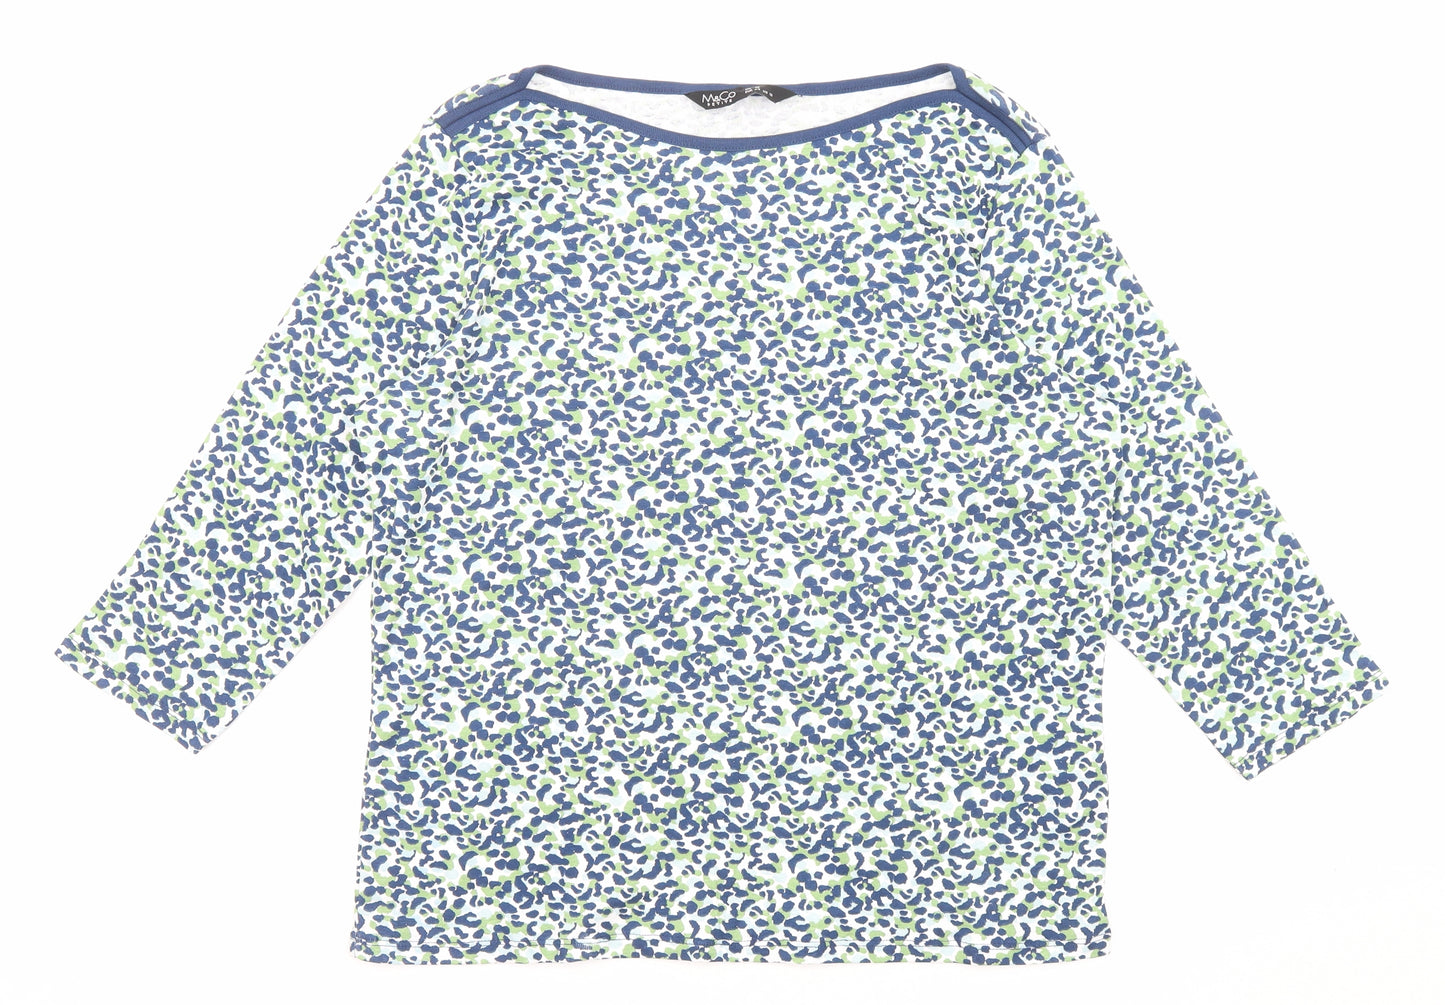 M&Co Womens Multicoloured Animal Print Cotton Basic T-Shirt Size 16 Boat Neck - Leopard Print